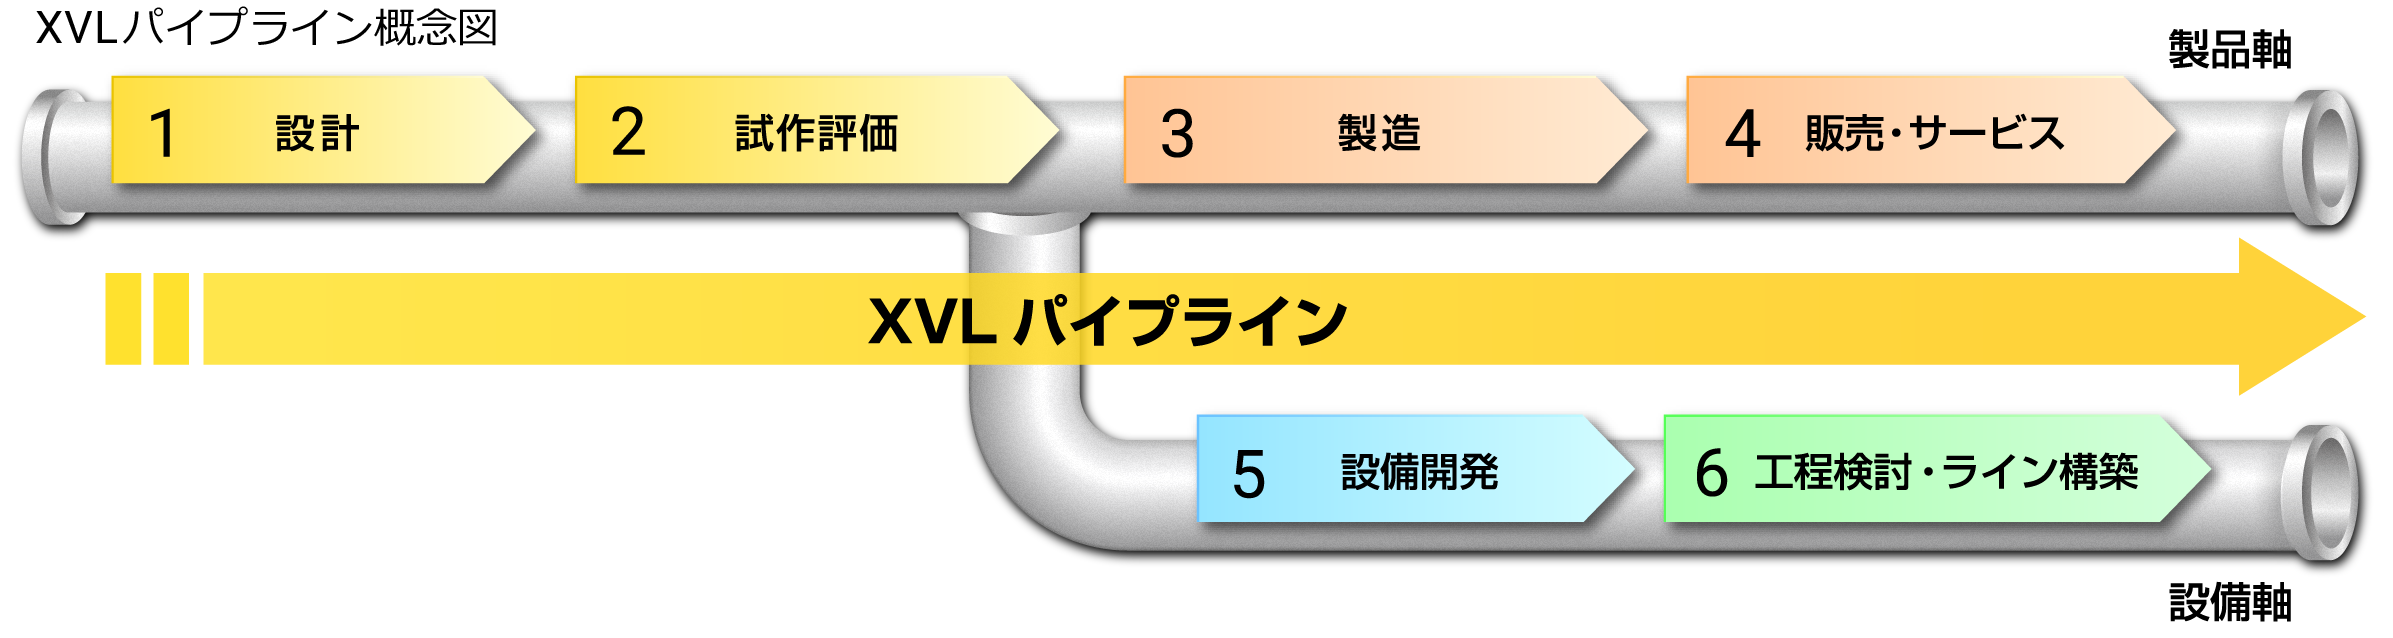 XVL パイプライン概念図